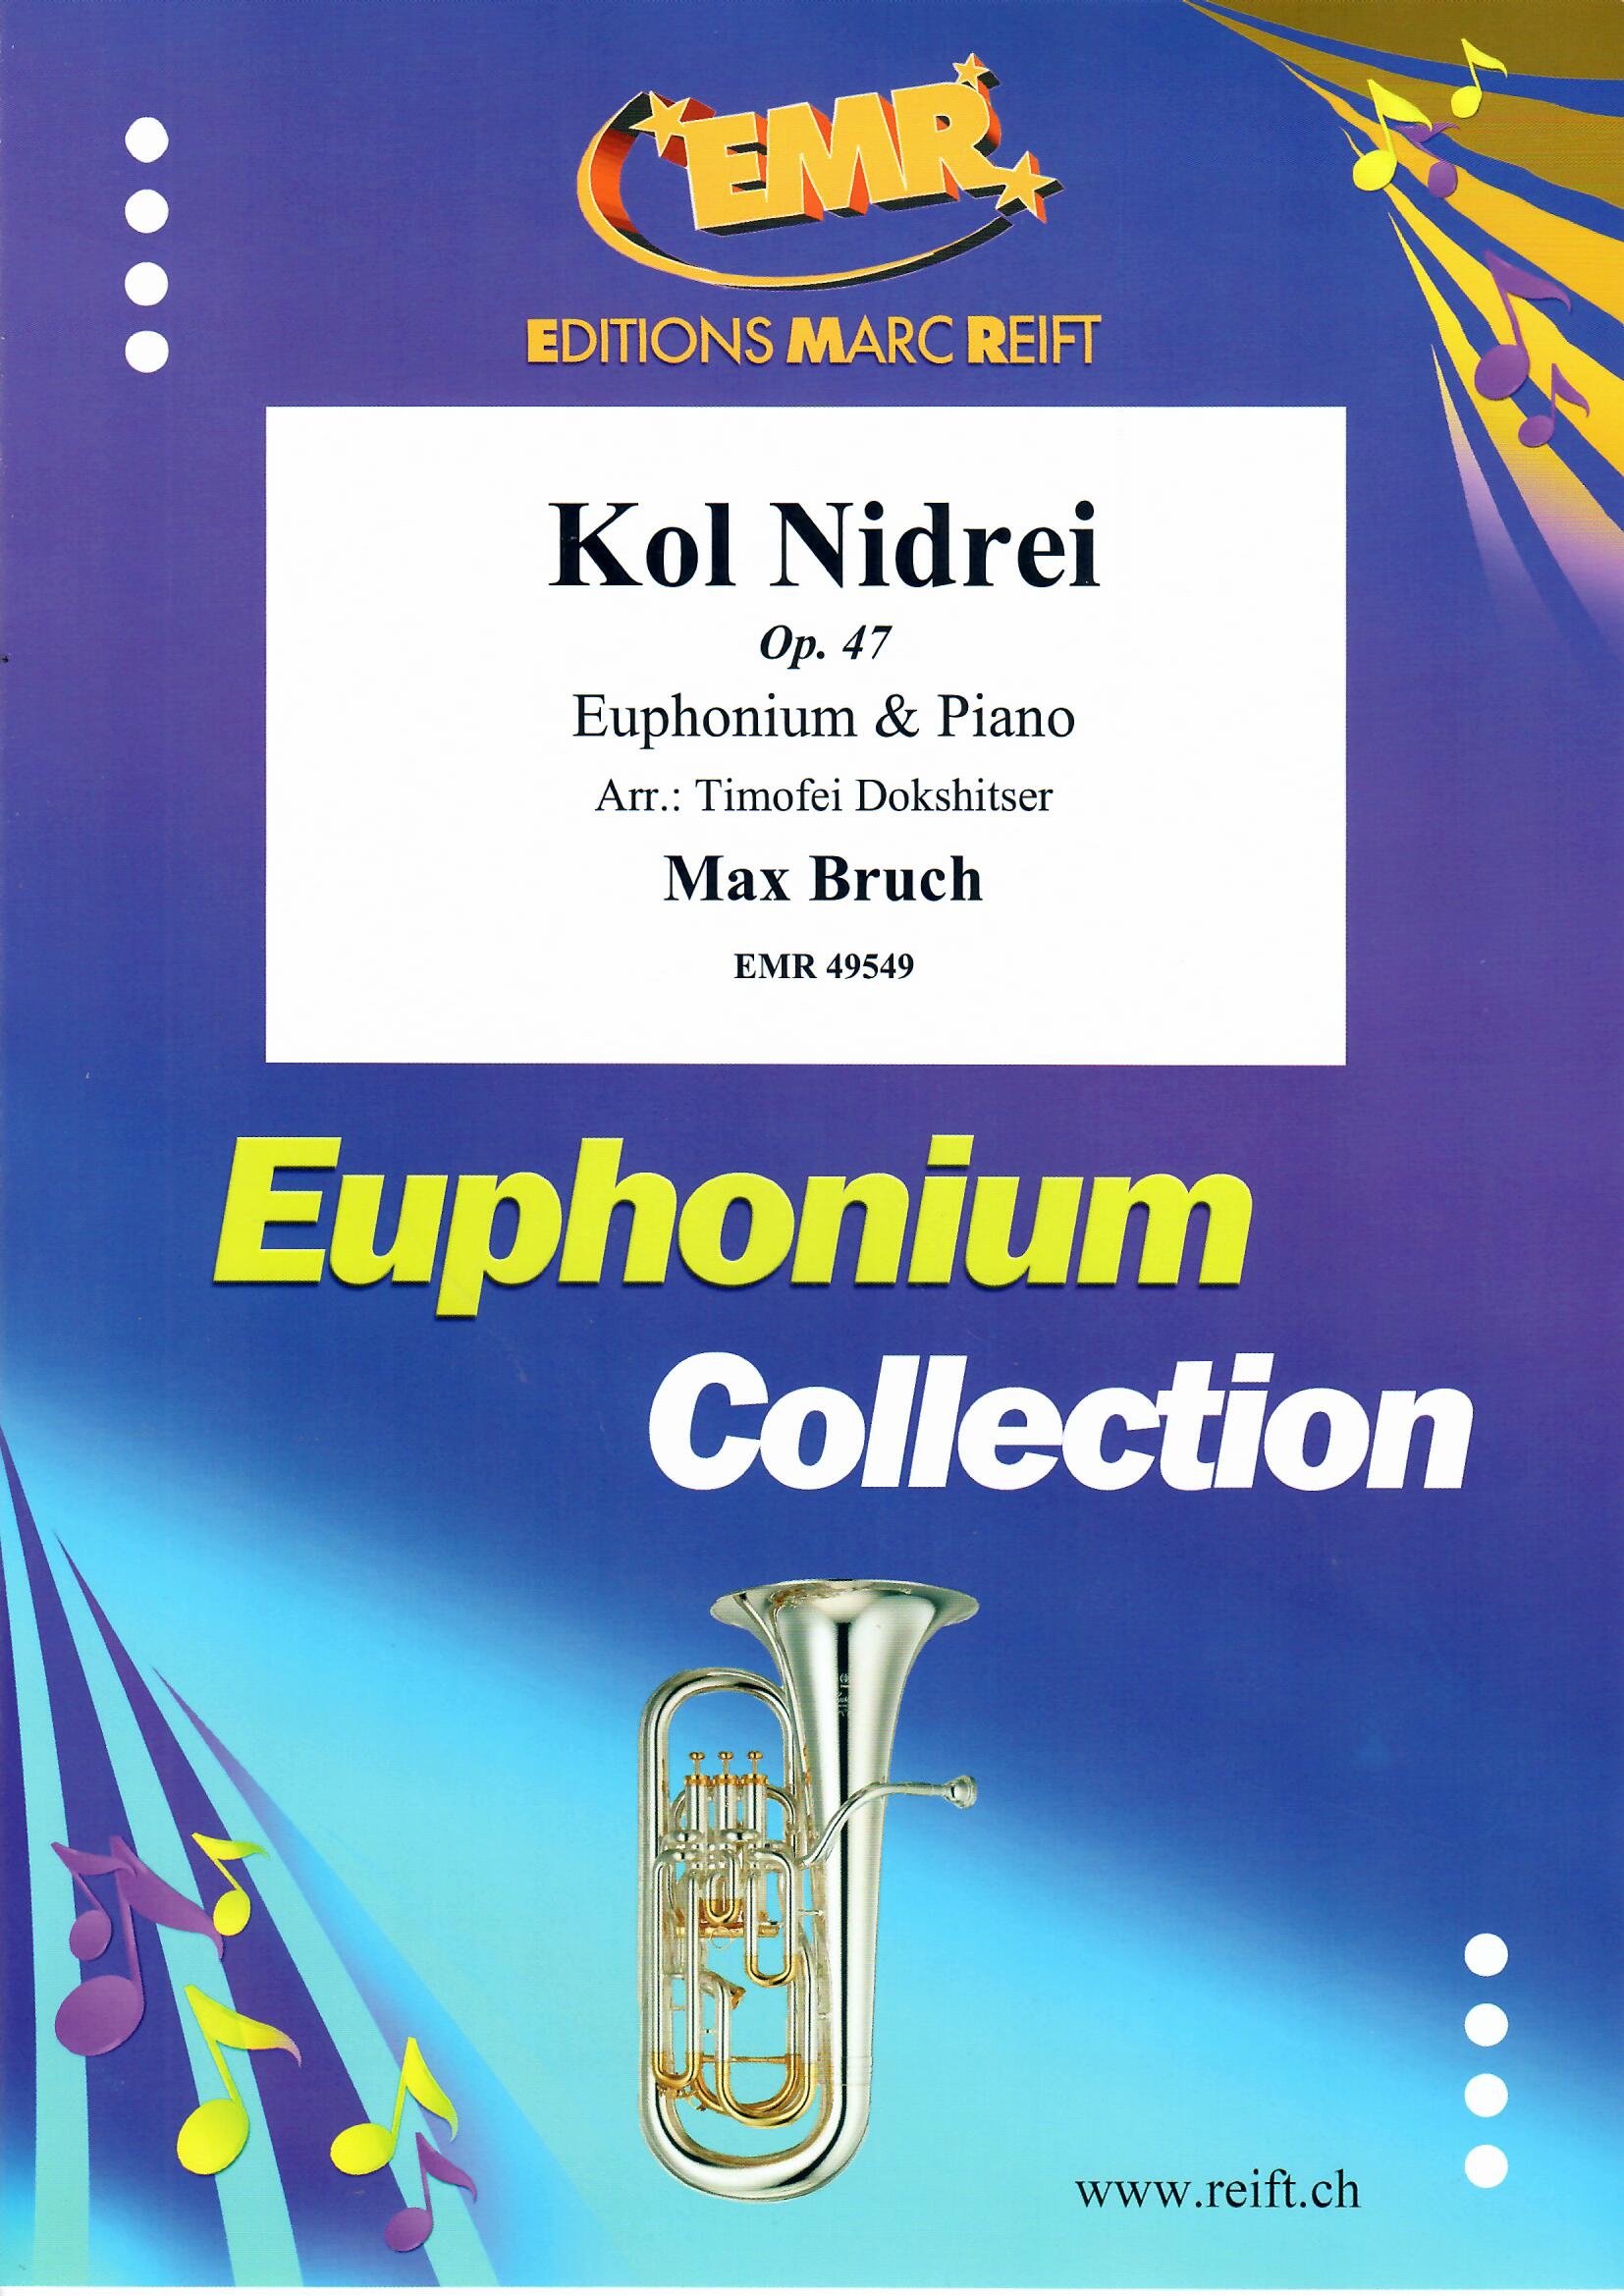 KOL NIDREI - Euphonium & Piano, SOLOS - Euphonium